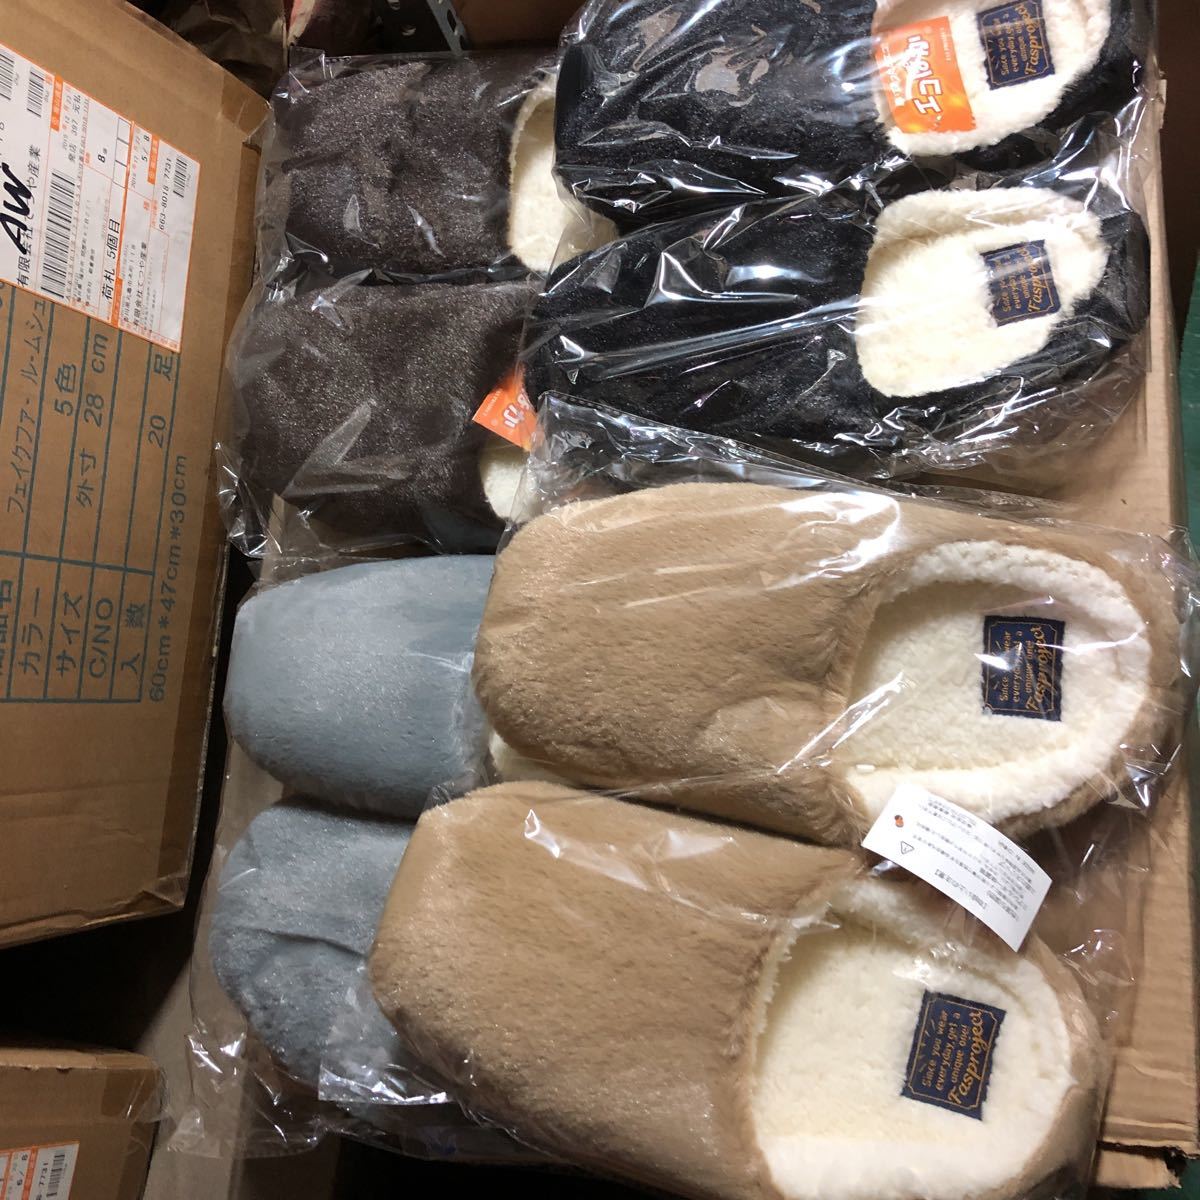  woman slippers fake fur room shoes 4 color 4 pair .2500 jpy 1 pair 980 jpy. goods 